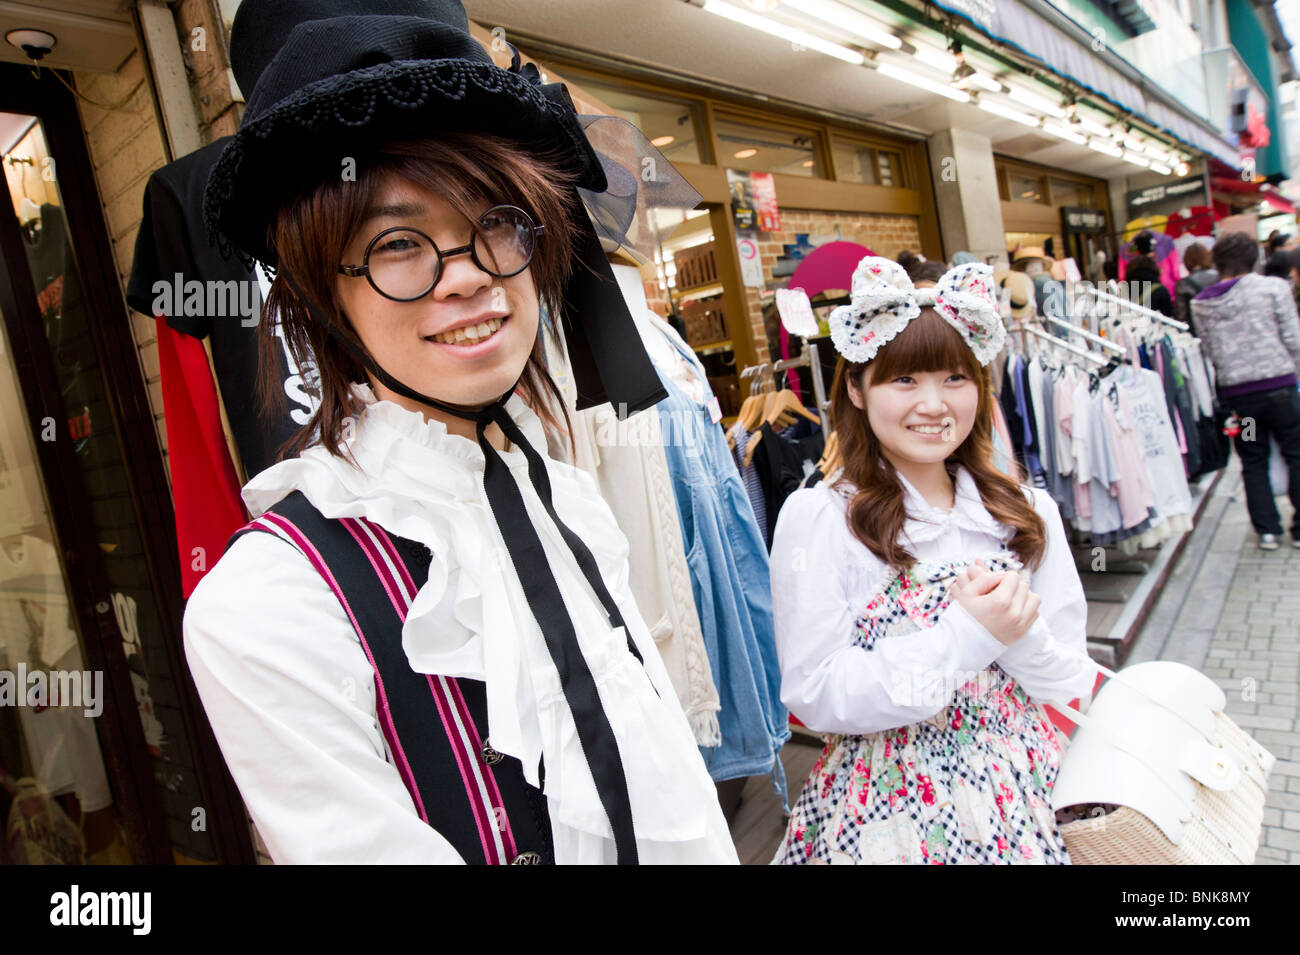 Les adolescents portant des vêtements cosplay sur Takeshita Dori à Harajuku, Tokyo, Japon Banque D'Images